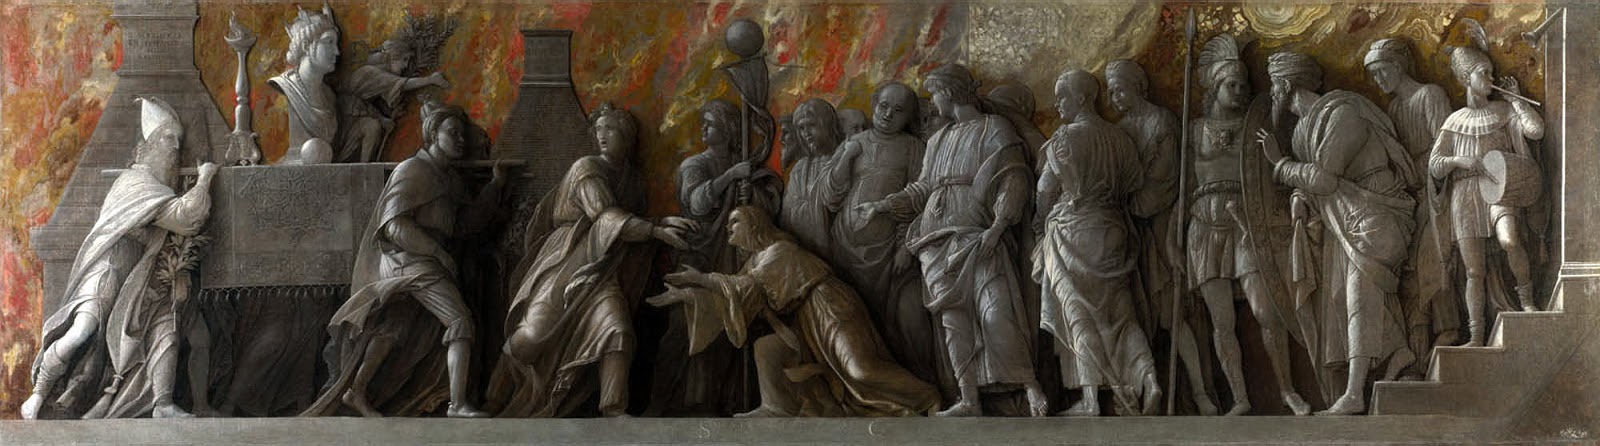 Andrea+Mantegna-1431-1506 (103).jpg